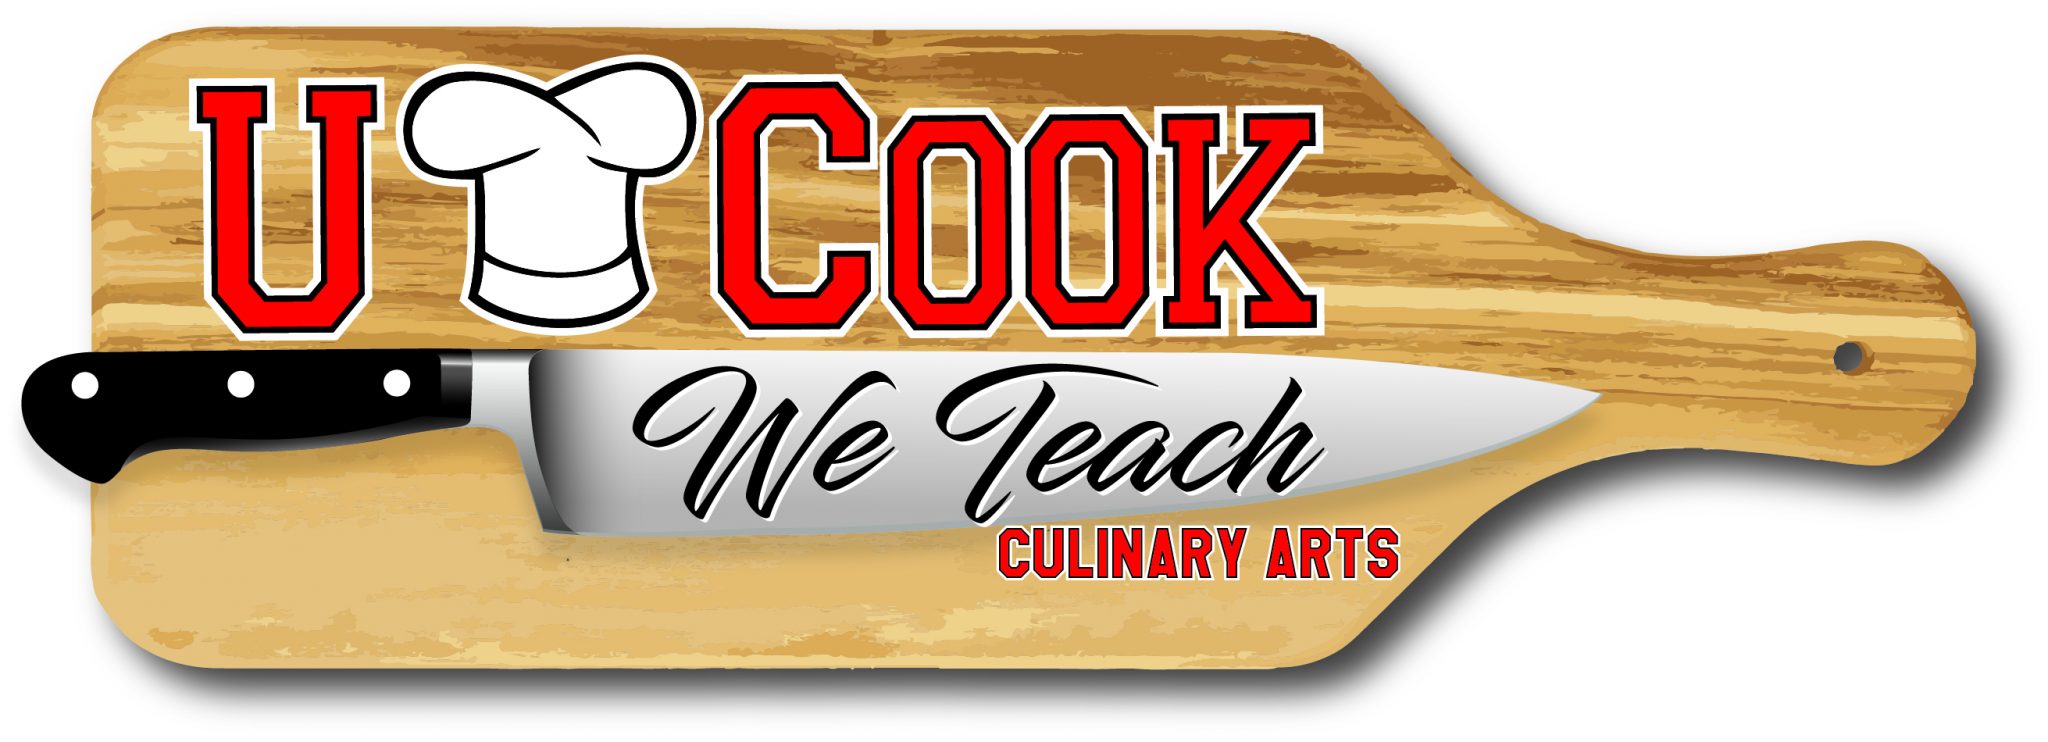 UCook We Teach Culinary Arts (2nd Class)